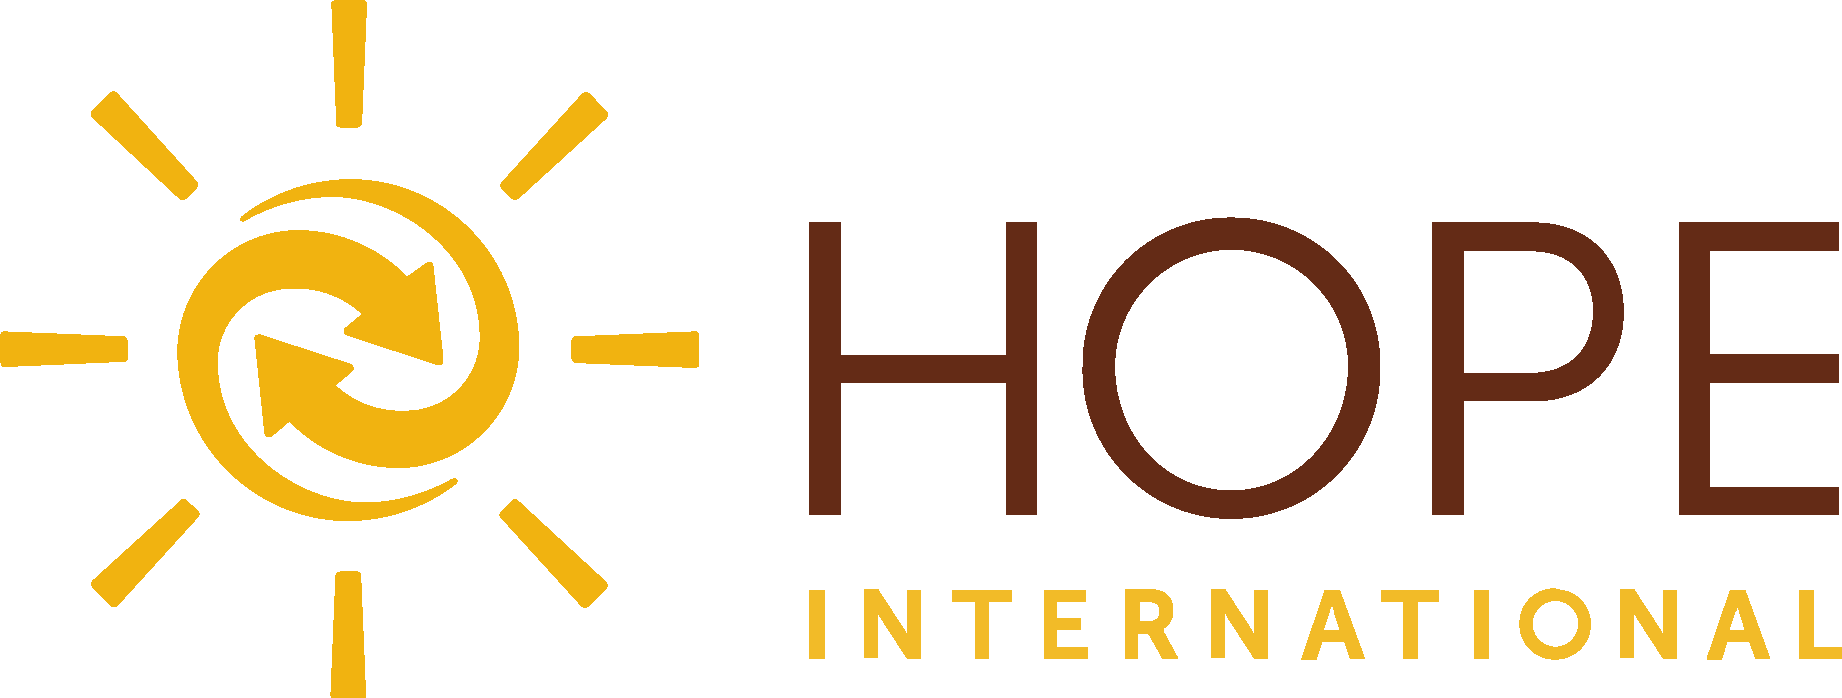 Hope International Logo Vector